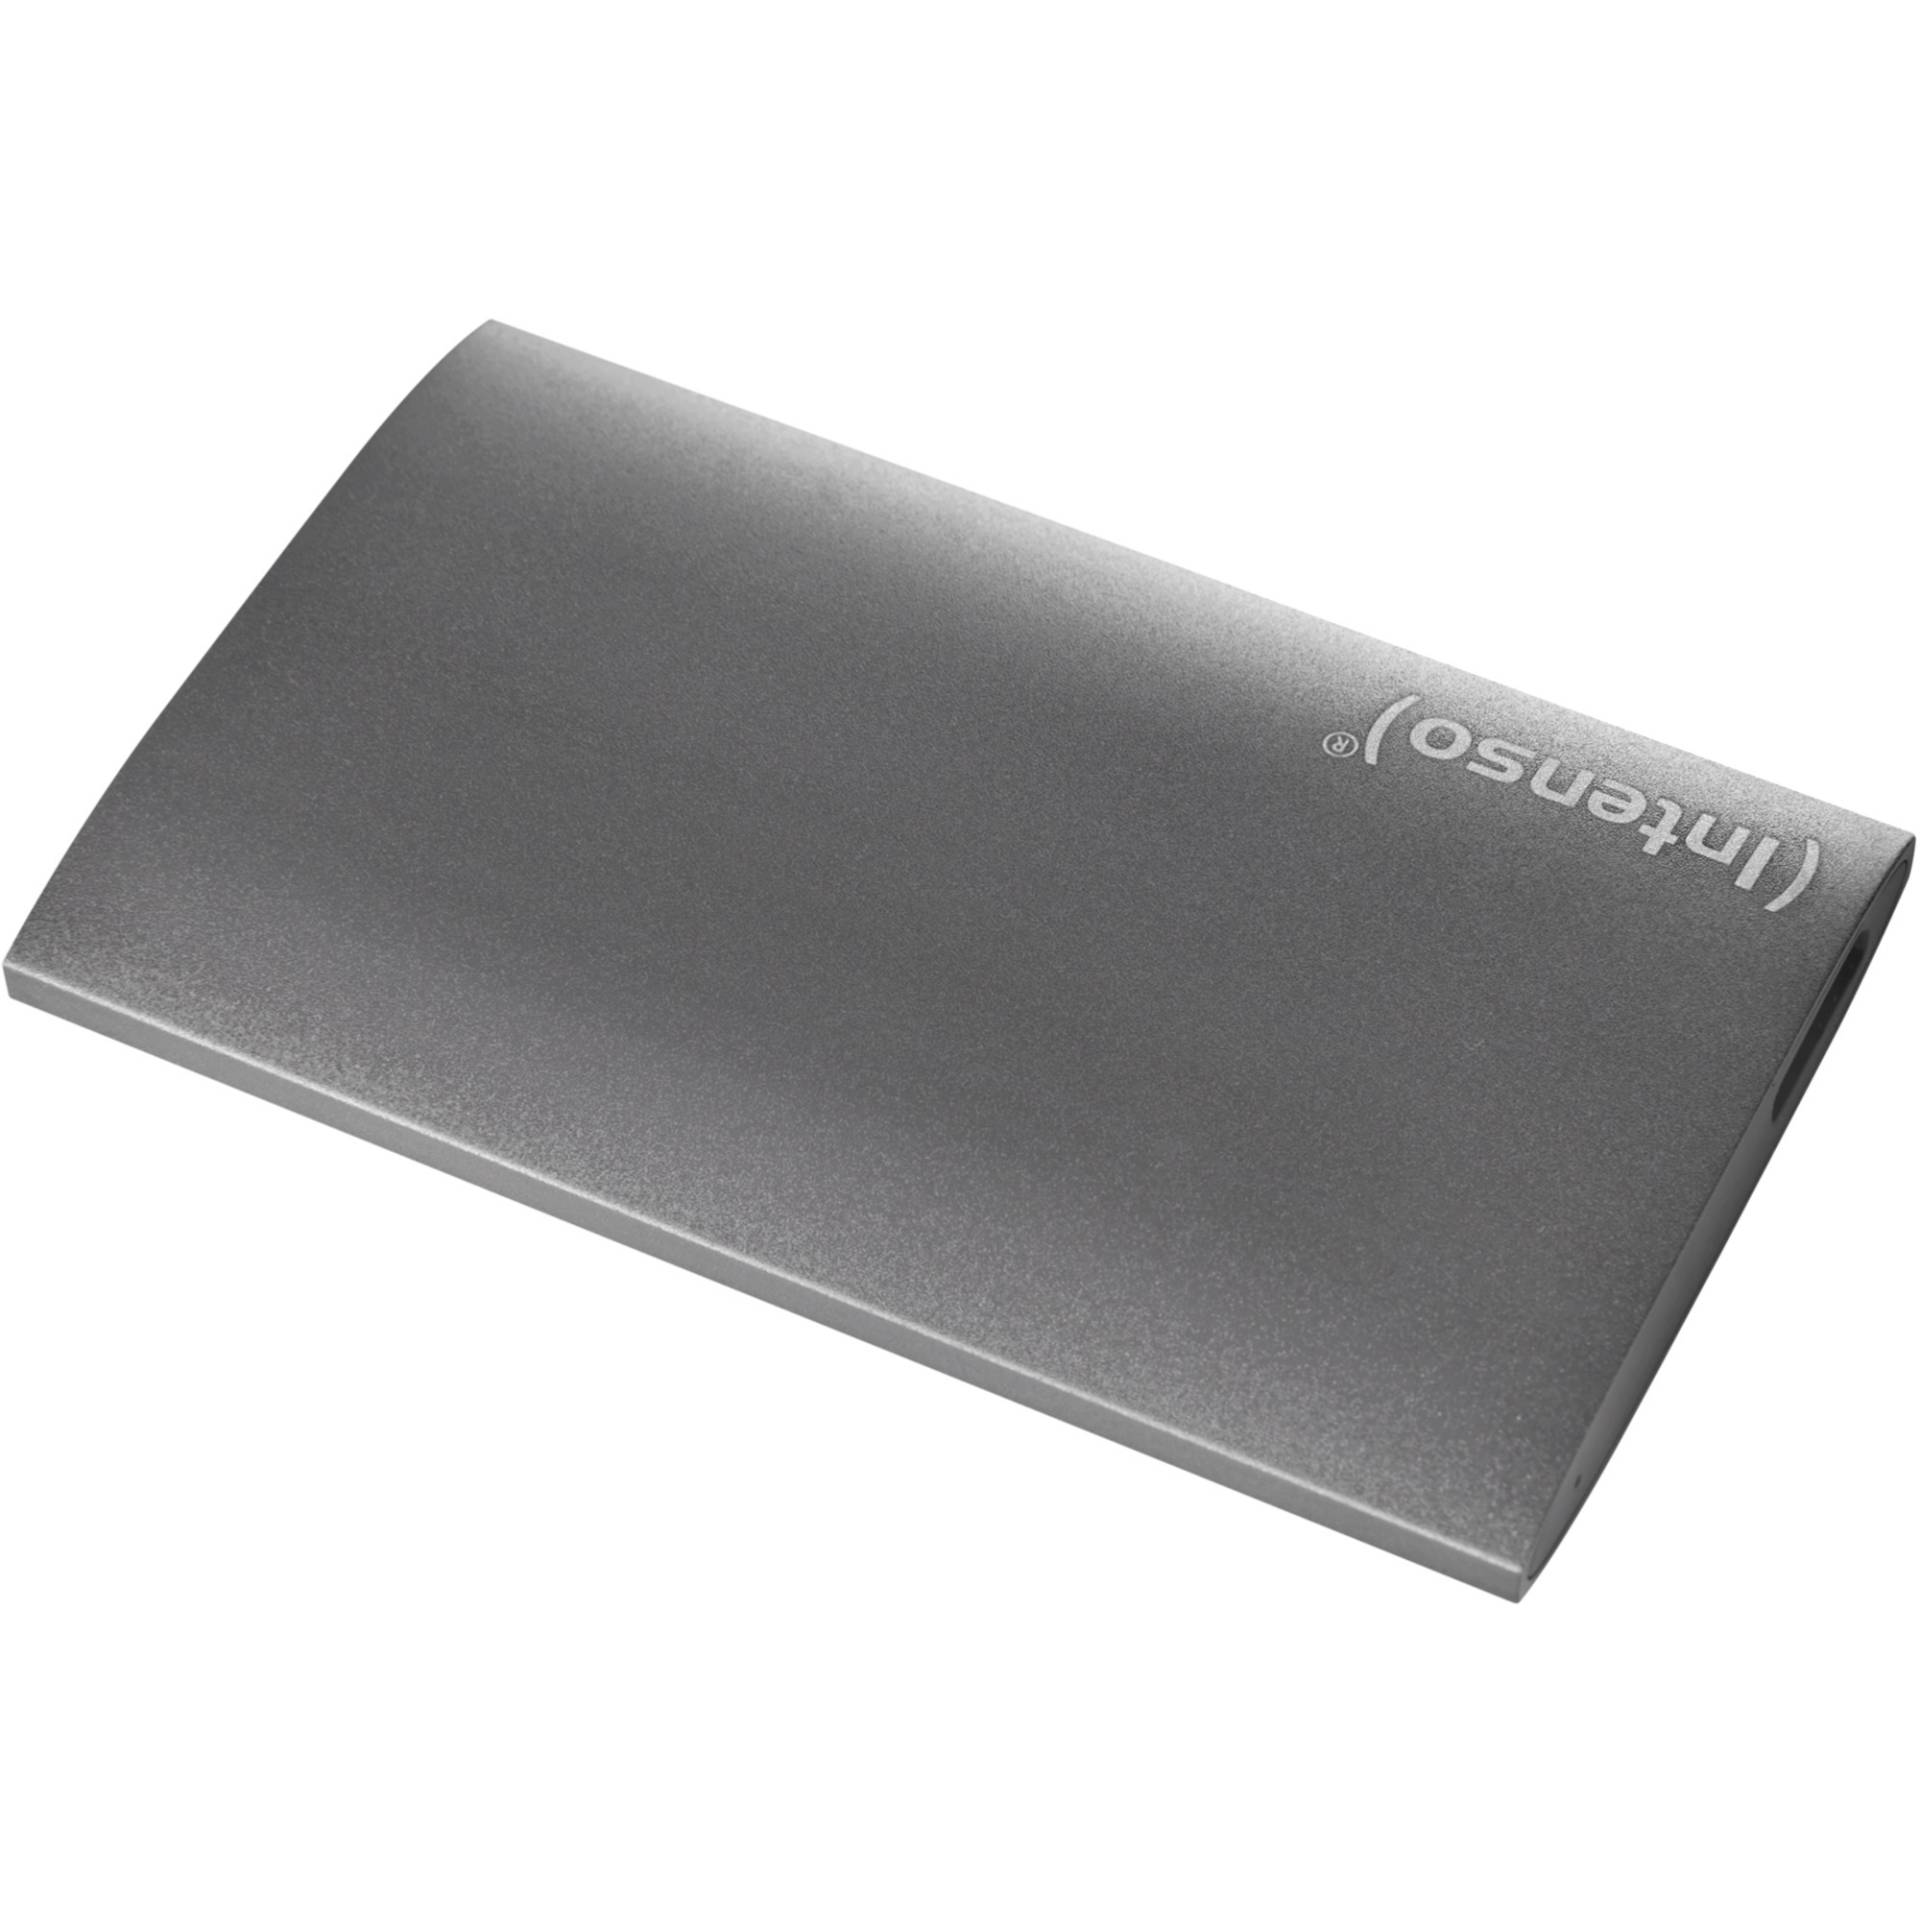 Portable SSD Premium 128 GB, Externe SSD von Intenso